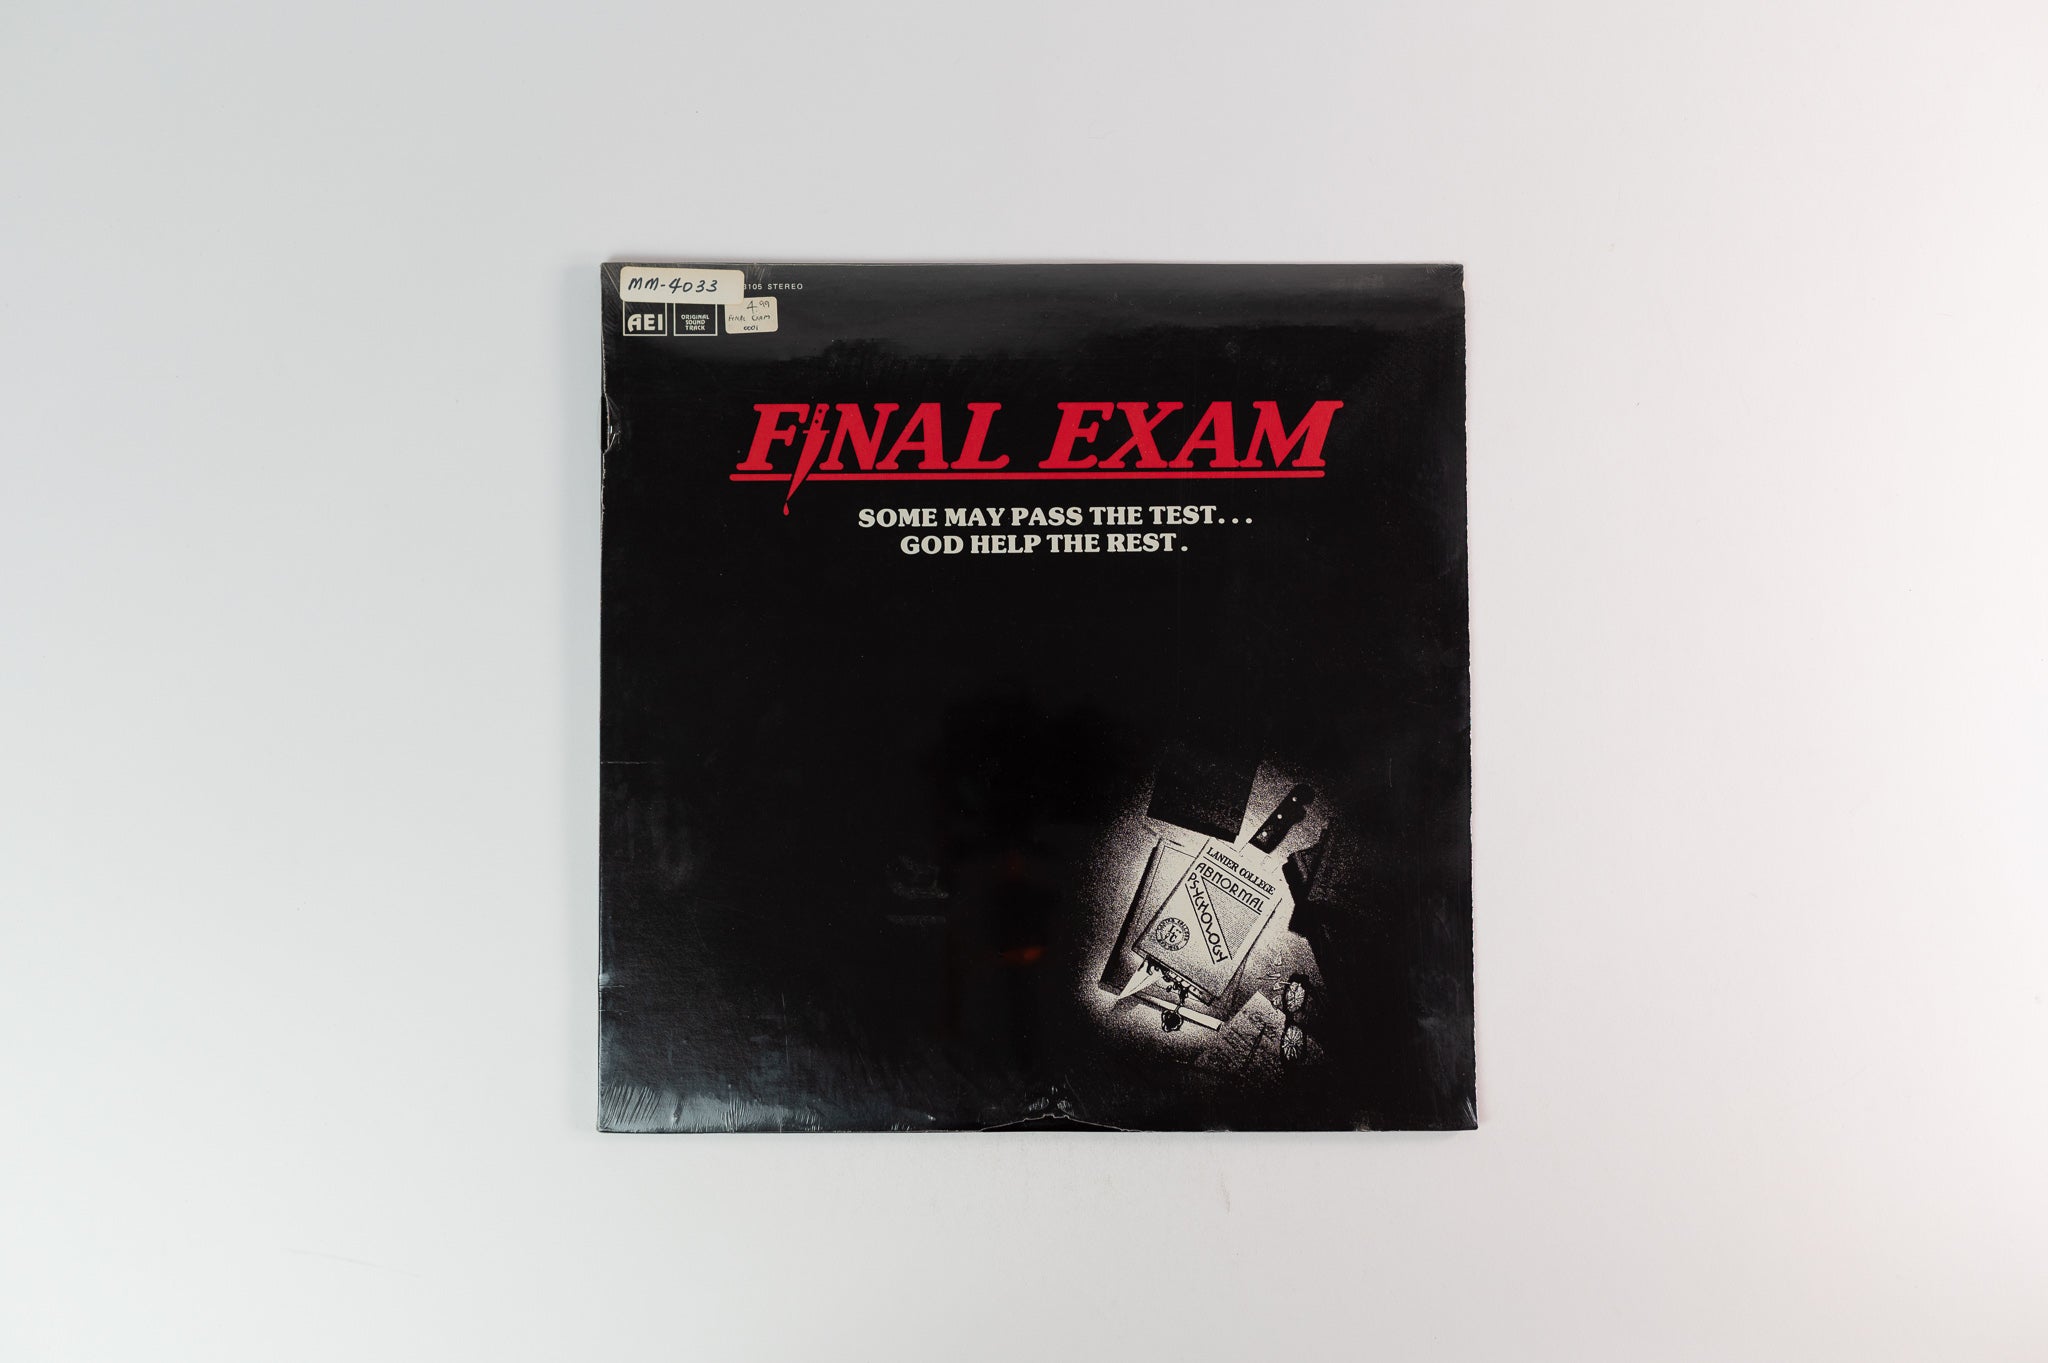 Gary S. Scott - Final Exam on AEI Sealed